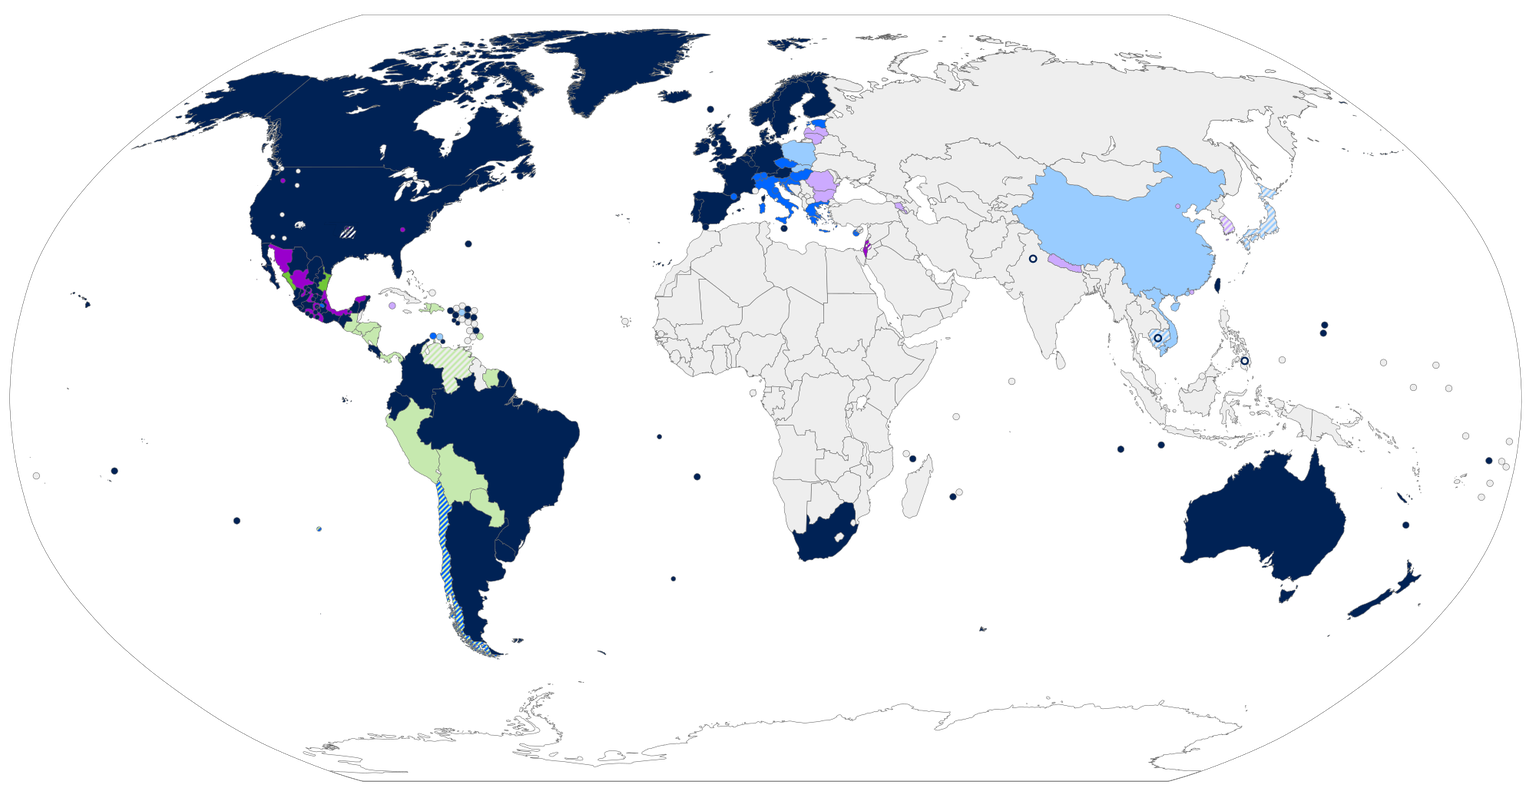 https://commons.wikimedia.org/wiki/File:World_marriage-equality_laws_(up_to_date).svg
Rechtliche Situation für gleichgeschlechtliche Paare in der Welt.
cc-by-sa 4.0